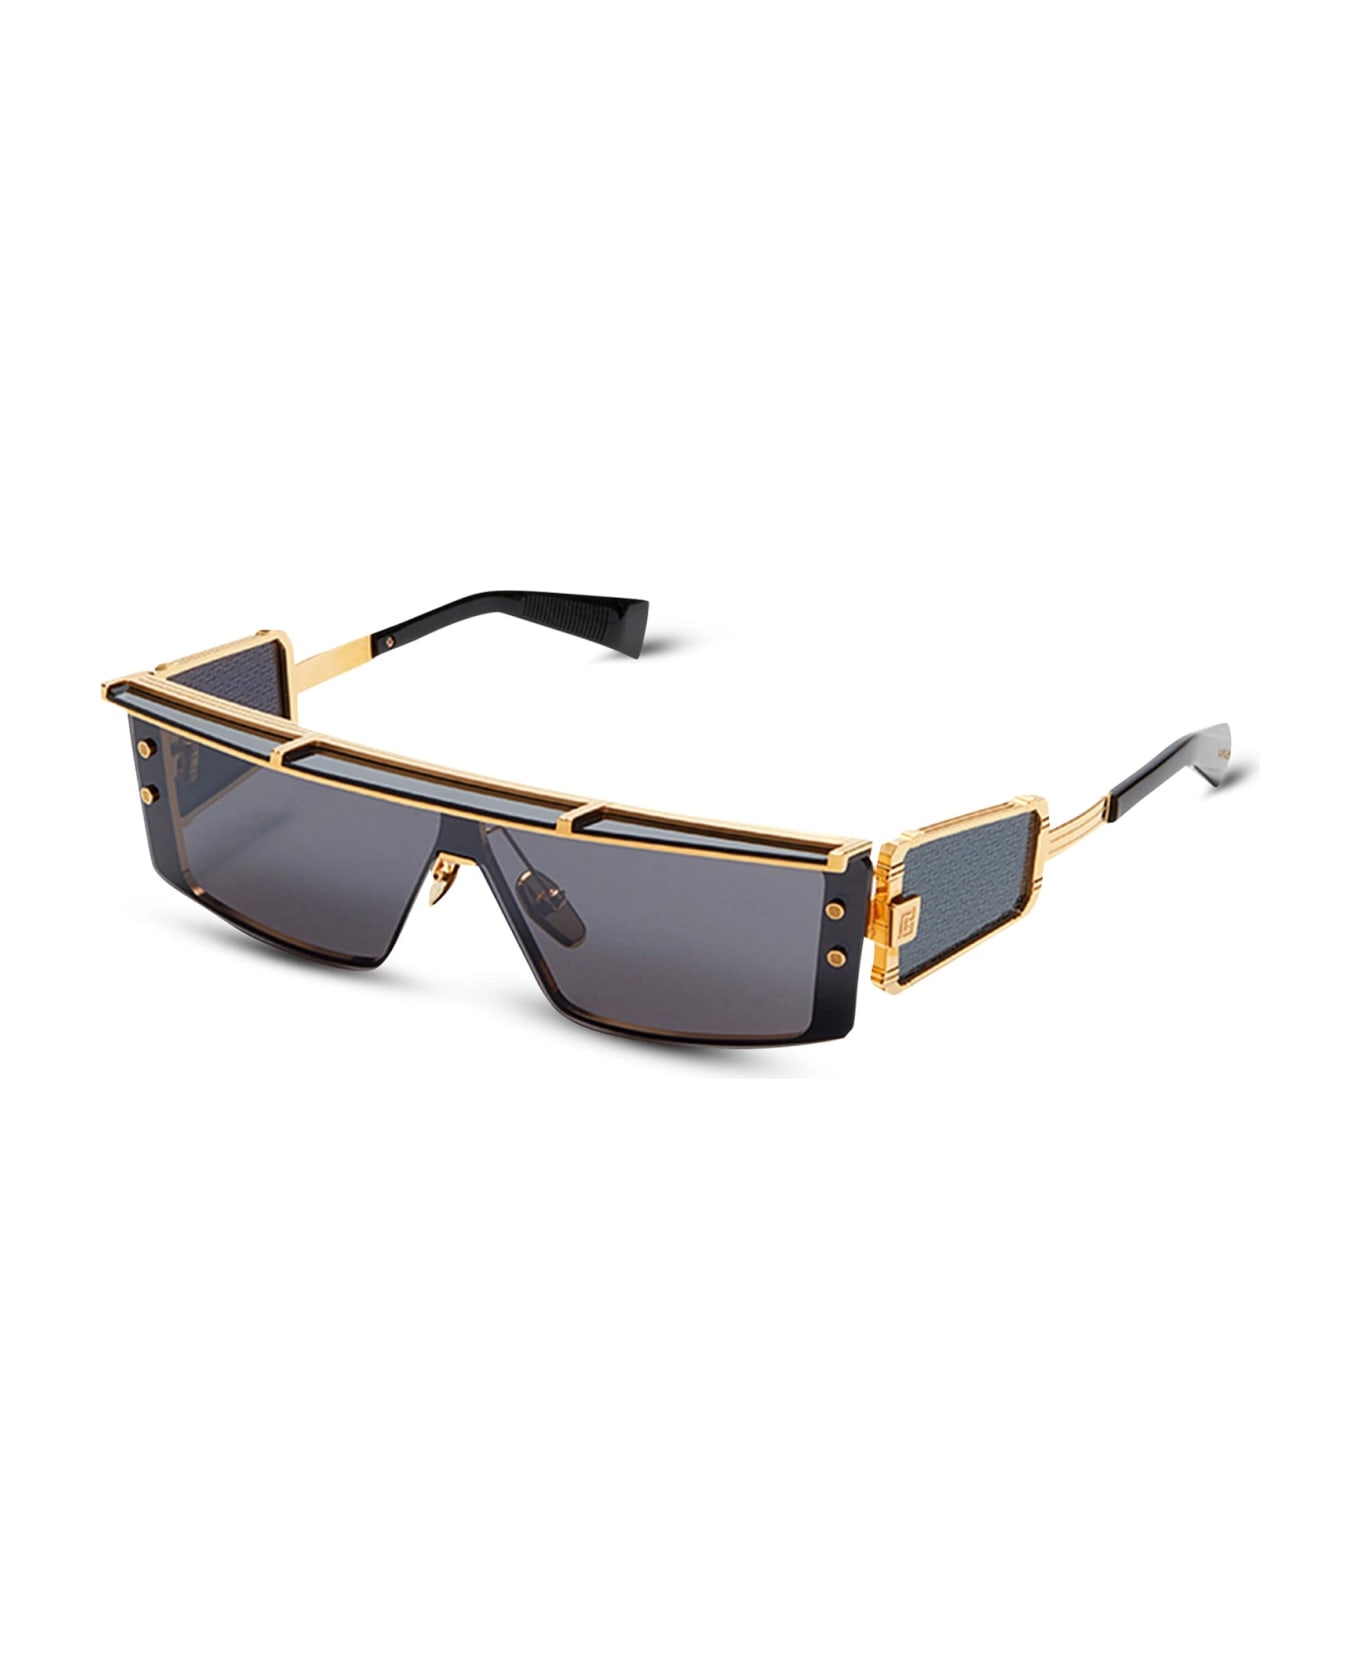 Balmain Wonderboy Iii - Black / Gold Sunglasses - Color